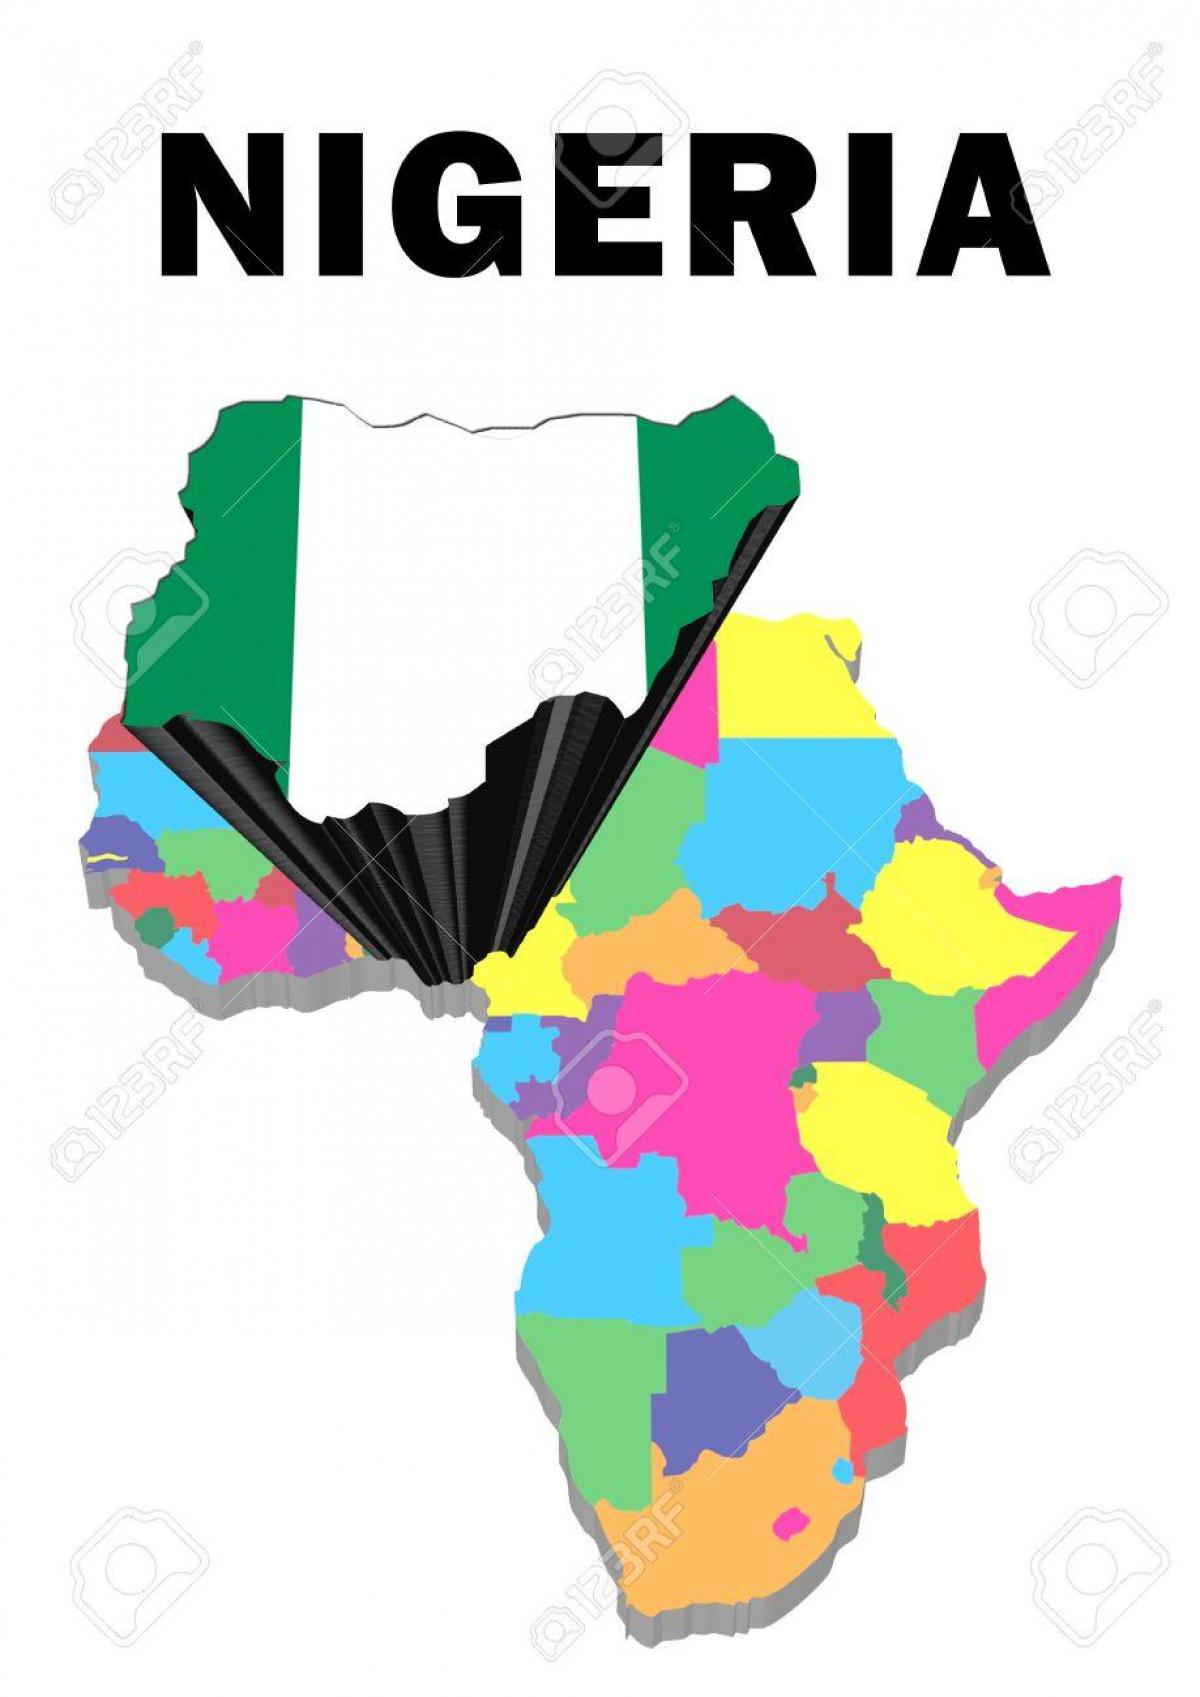 kaart van afrika met nigeria gemarkeerd